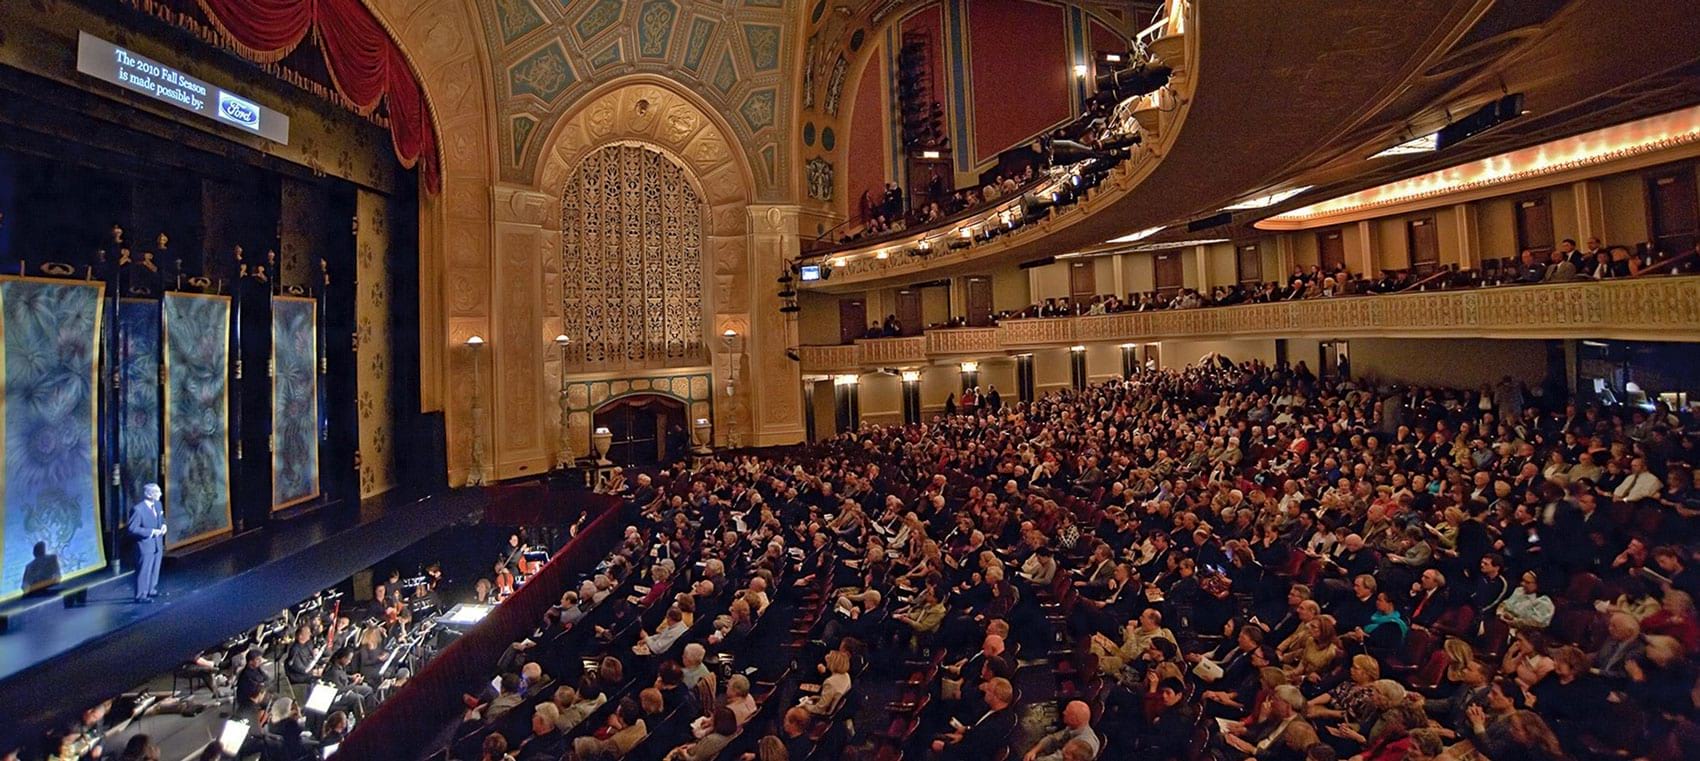 Wsi Imageoptim Detroit Opera House Michigan Opera Theatre MAIN 